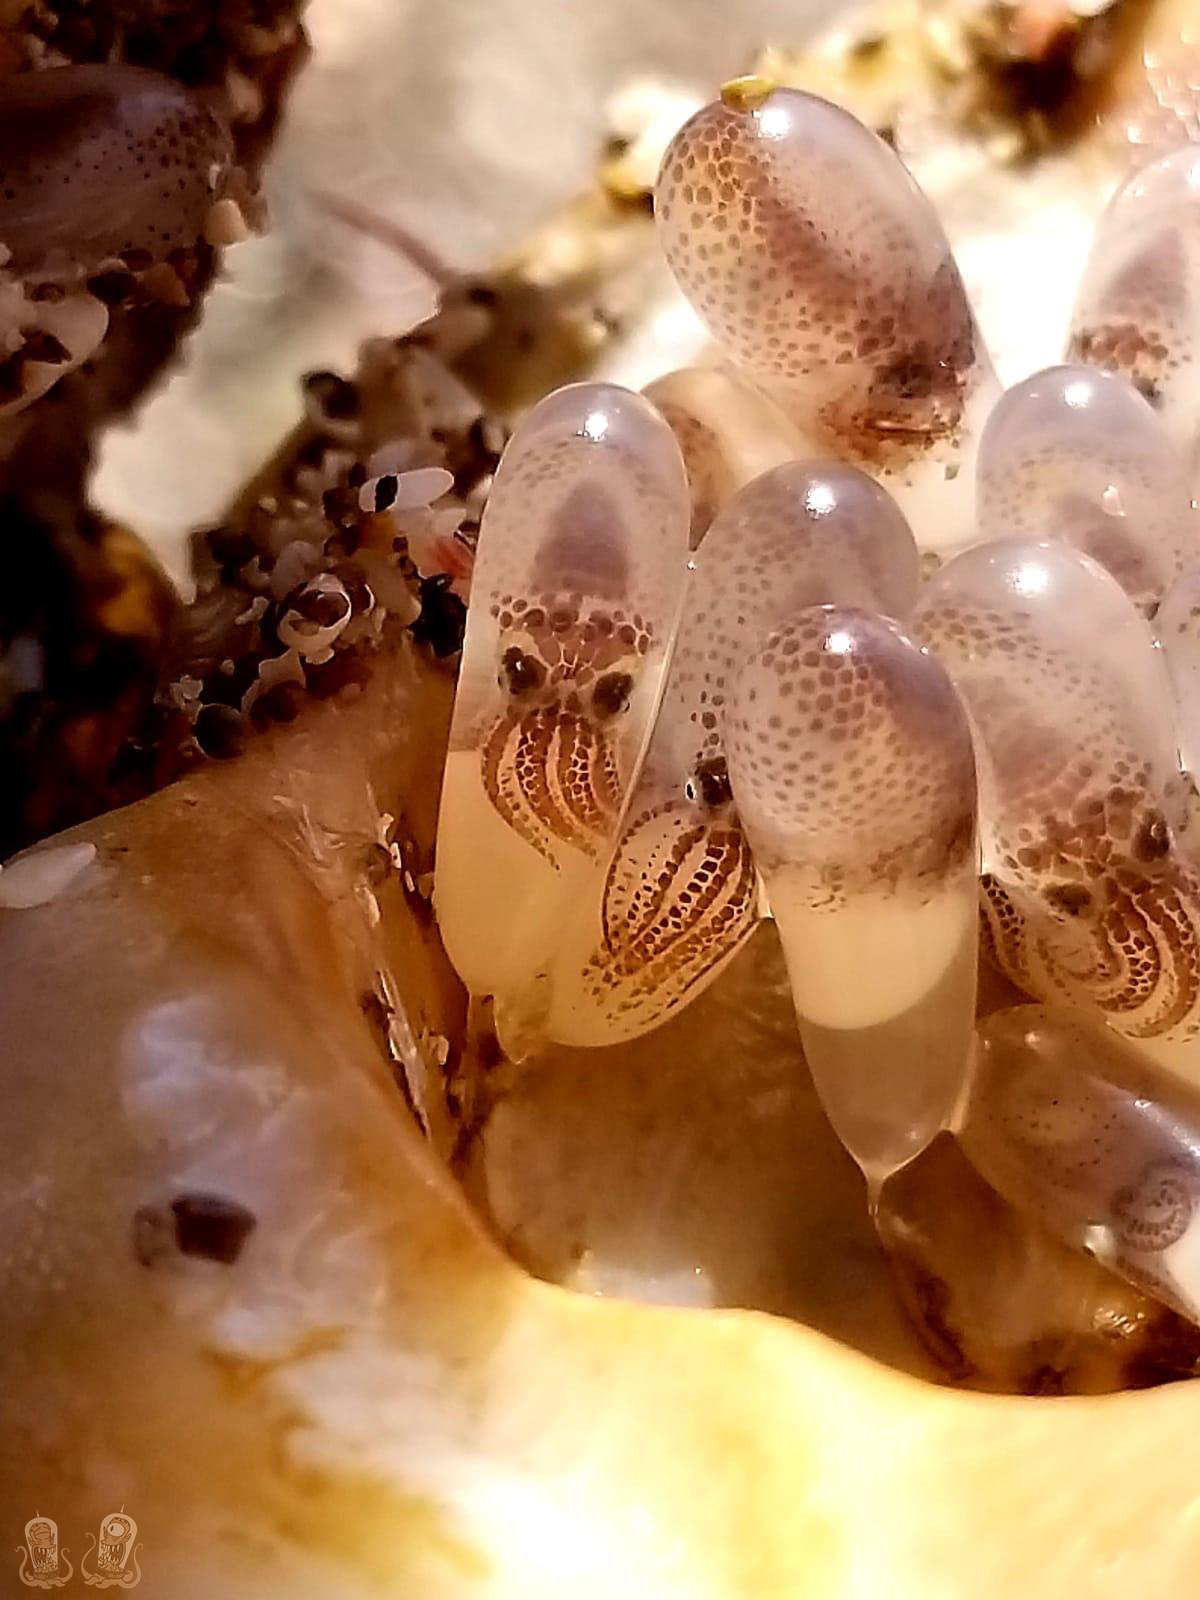 octopus eggs